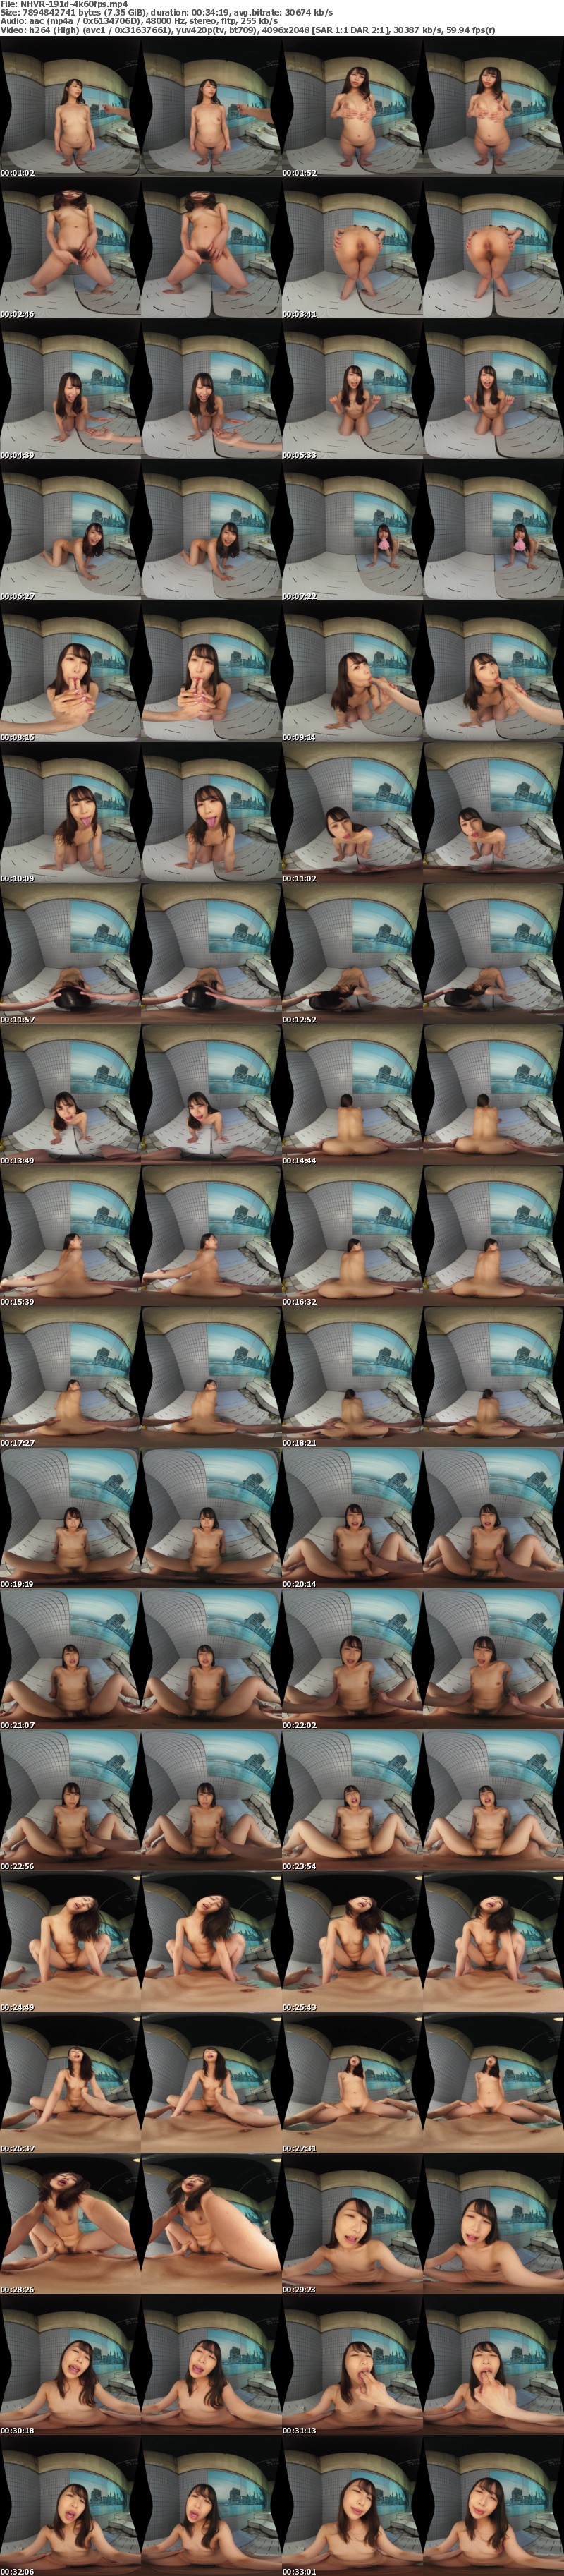 [VR] NHVR-191 【VR】催●銭湯 女湯に忍び込み片っ端からマインドコントロール中出し洗脳 完全肉便器ハーレム